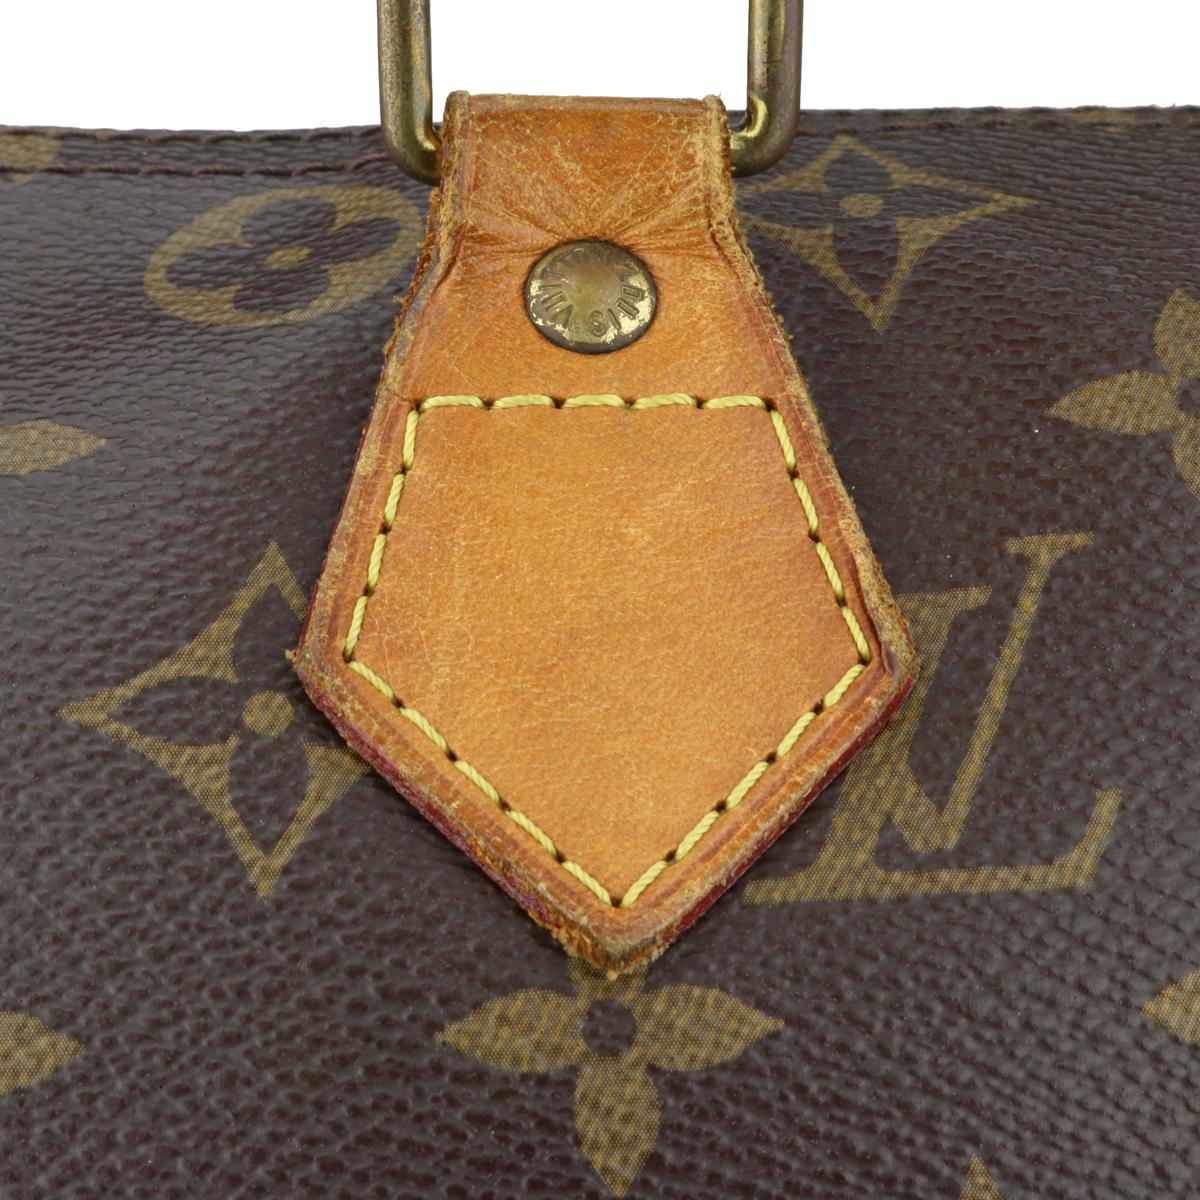 Louis Vuitton Speedy Bandoulière 30 Bag in Monogram 2013 12